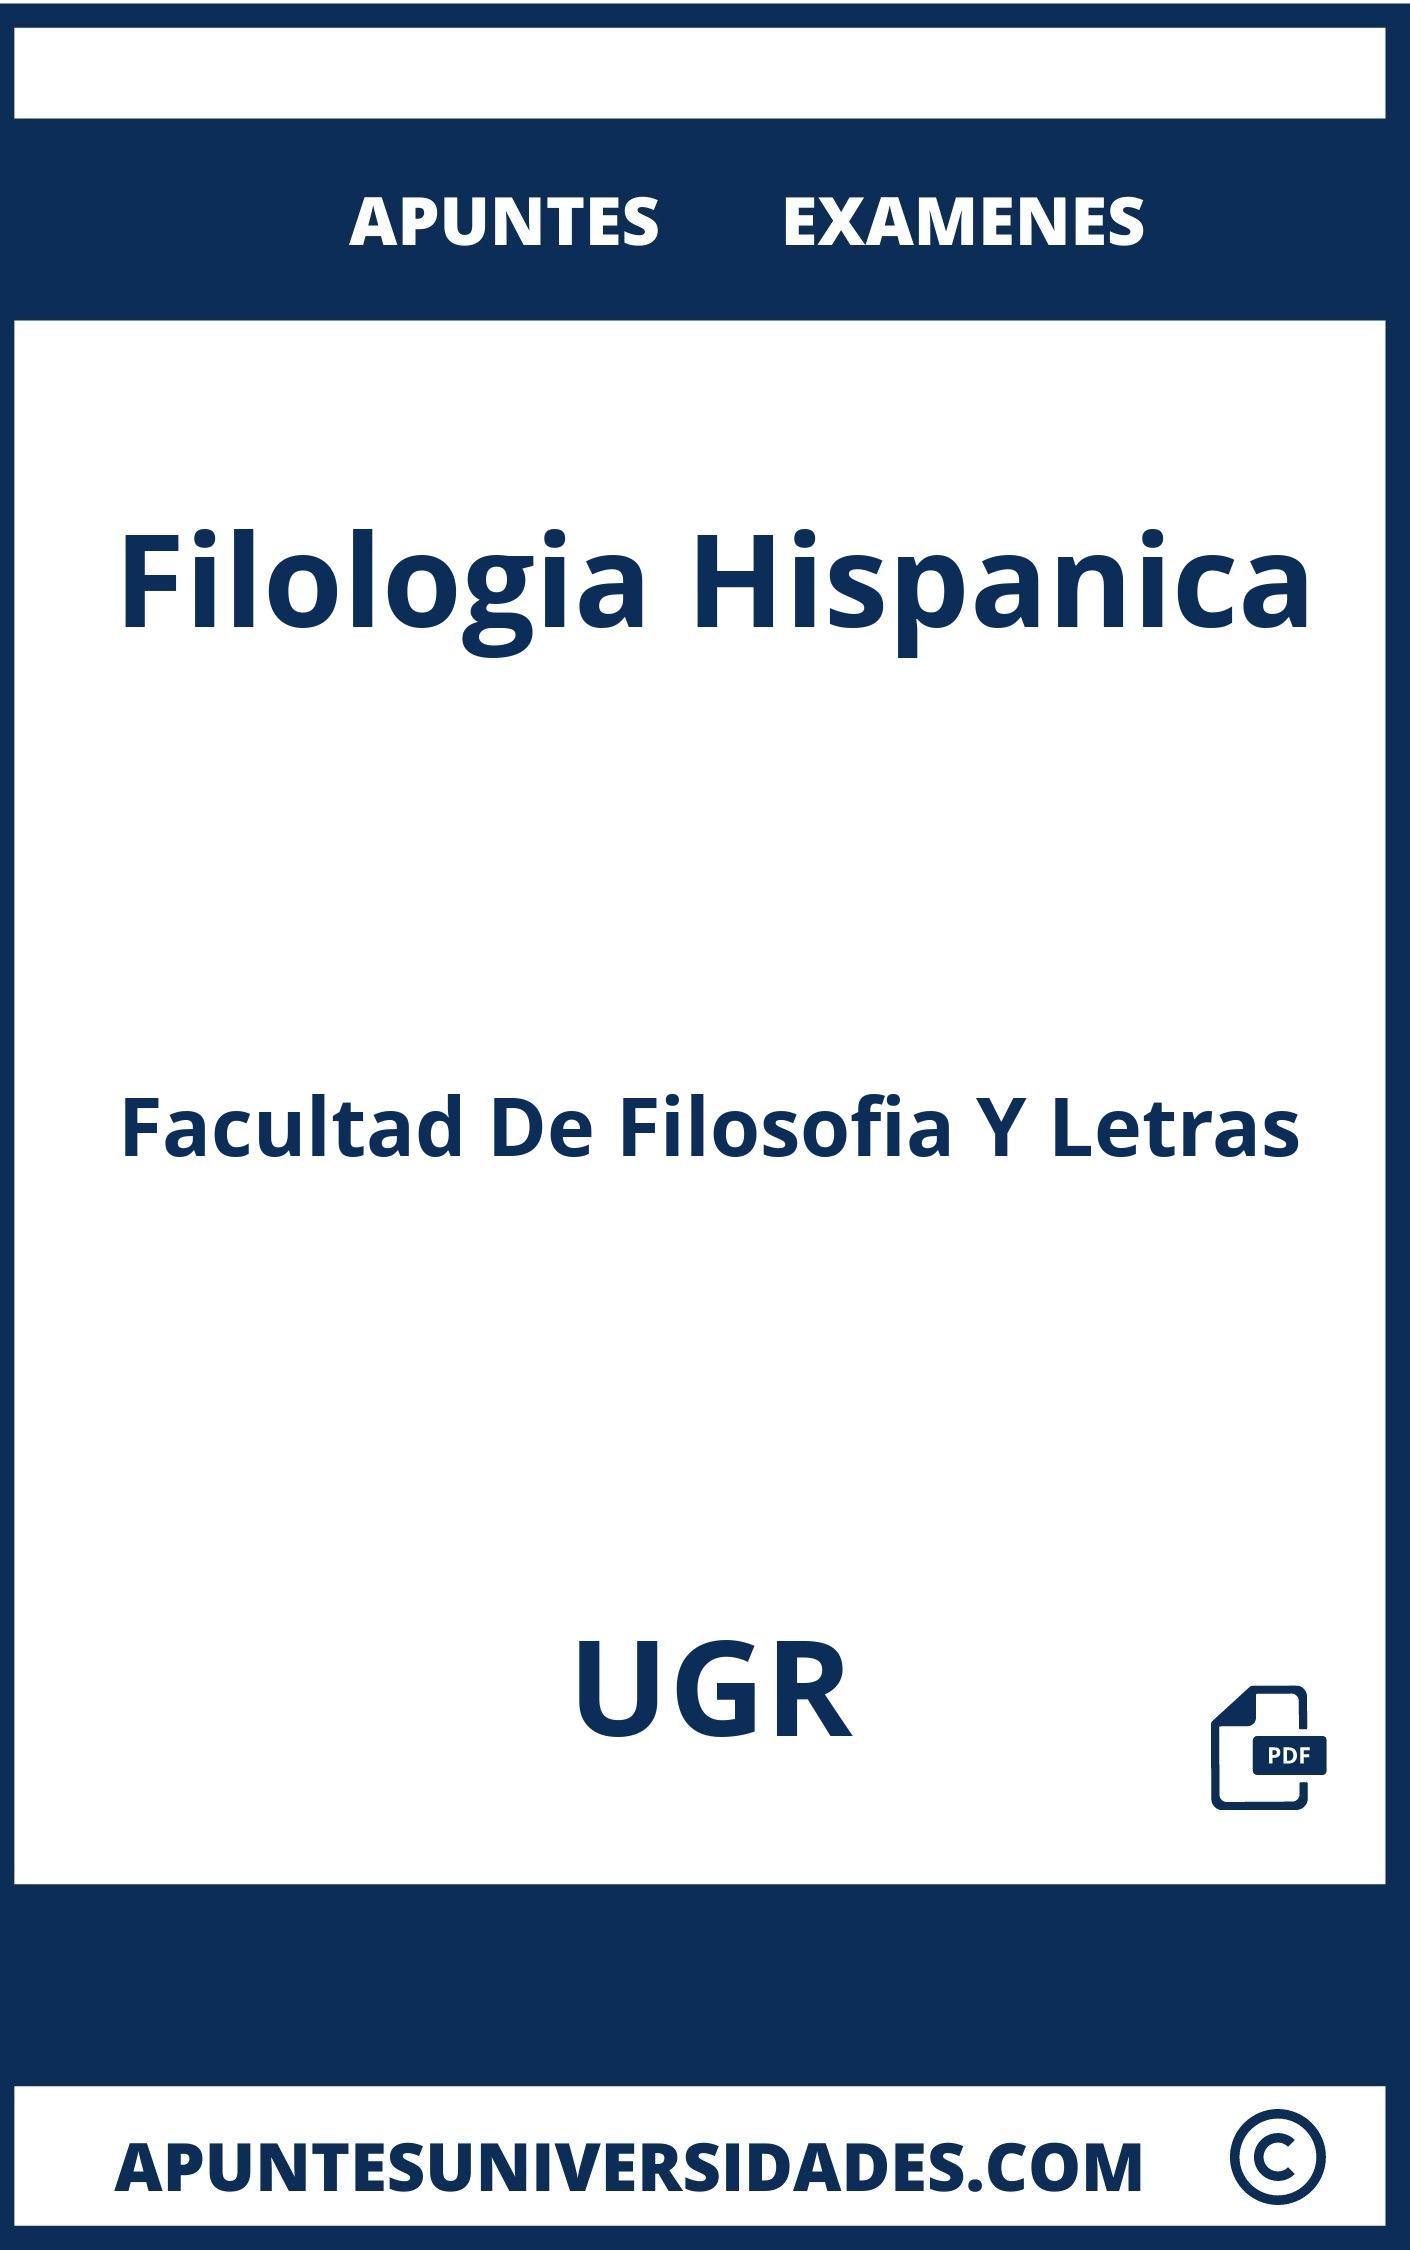 Apuntes y Examenes Filologia Hispanica UGR